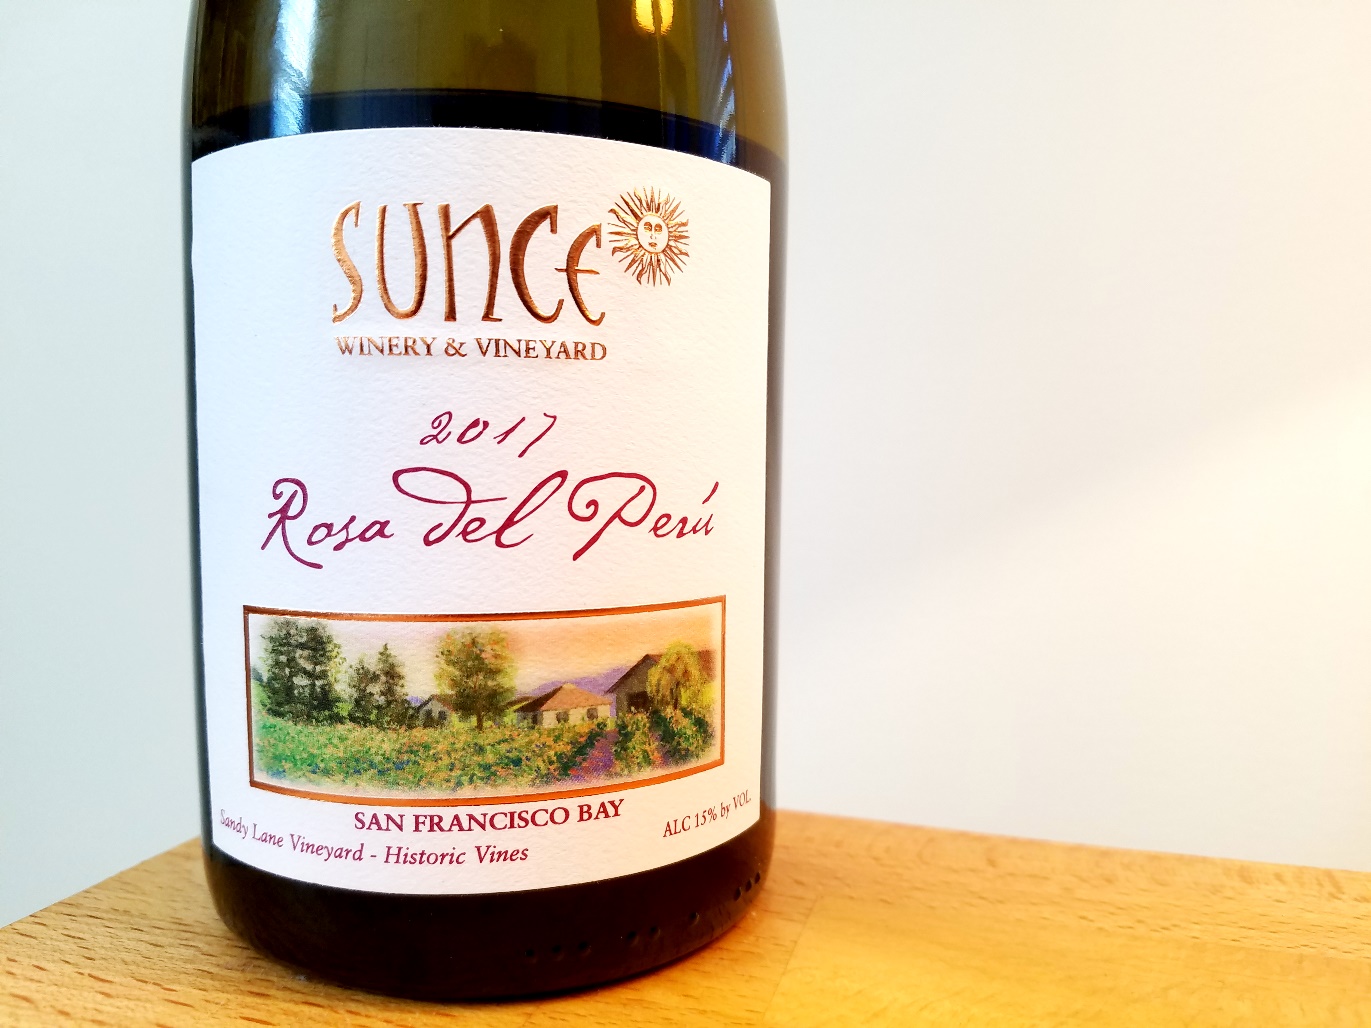 Sunce Winery & Vineyard, Rosa del Perú 2017, Sandy Lane Vineyard – Historic Vines, San Francisco Bay, California, Wine Casual